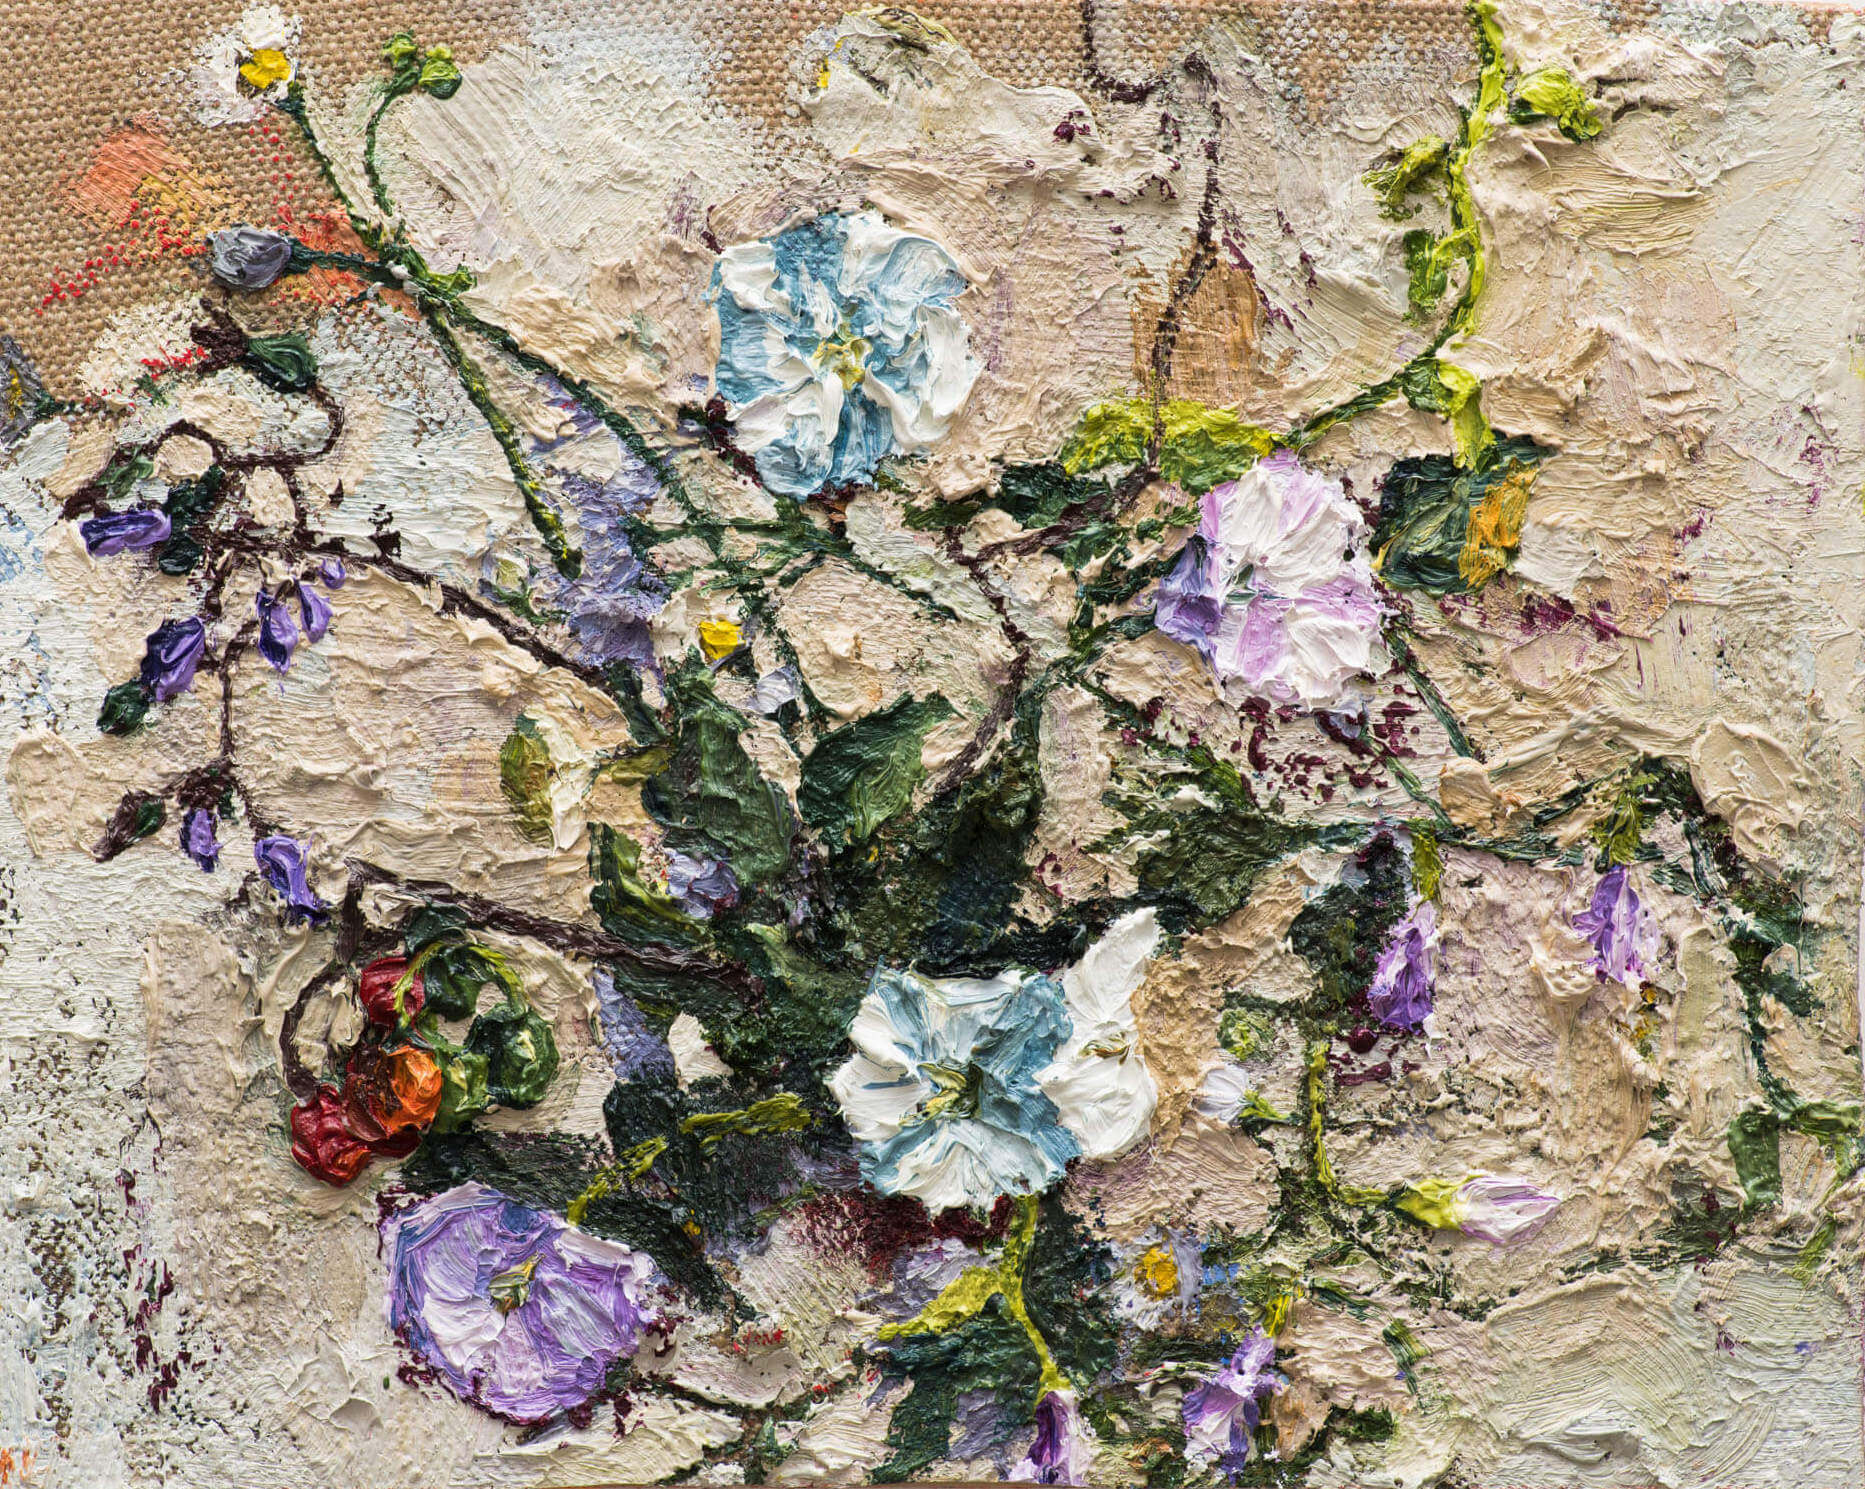 Avital Burg, Ash Street Flowers (Week 33), 2021, oil on linen on wood, 10 x 8 inches, 25.4 x 20.3 cm (courtesy of the artist)